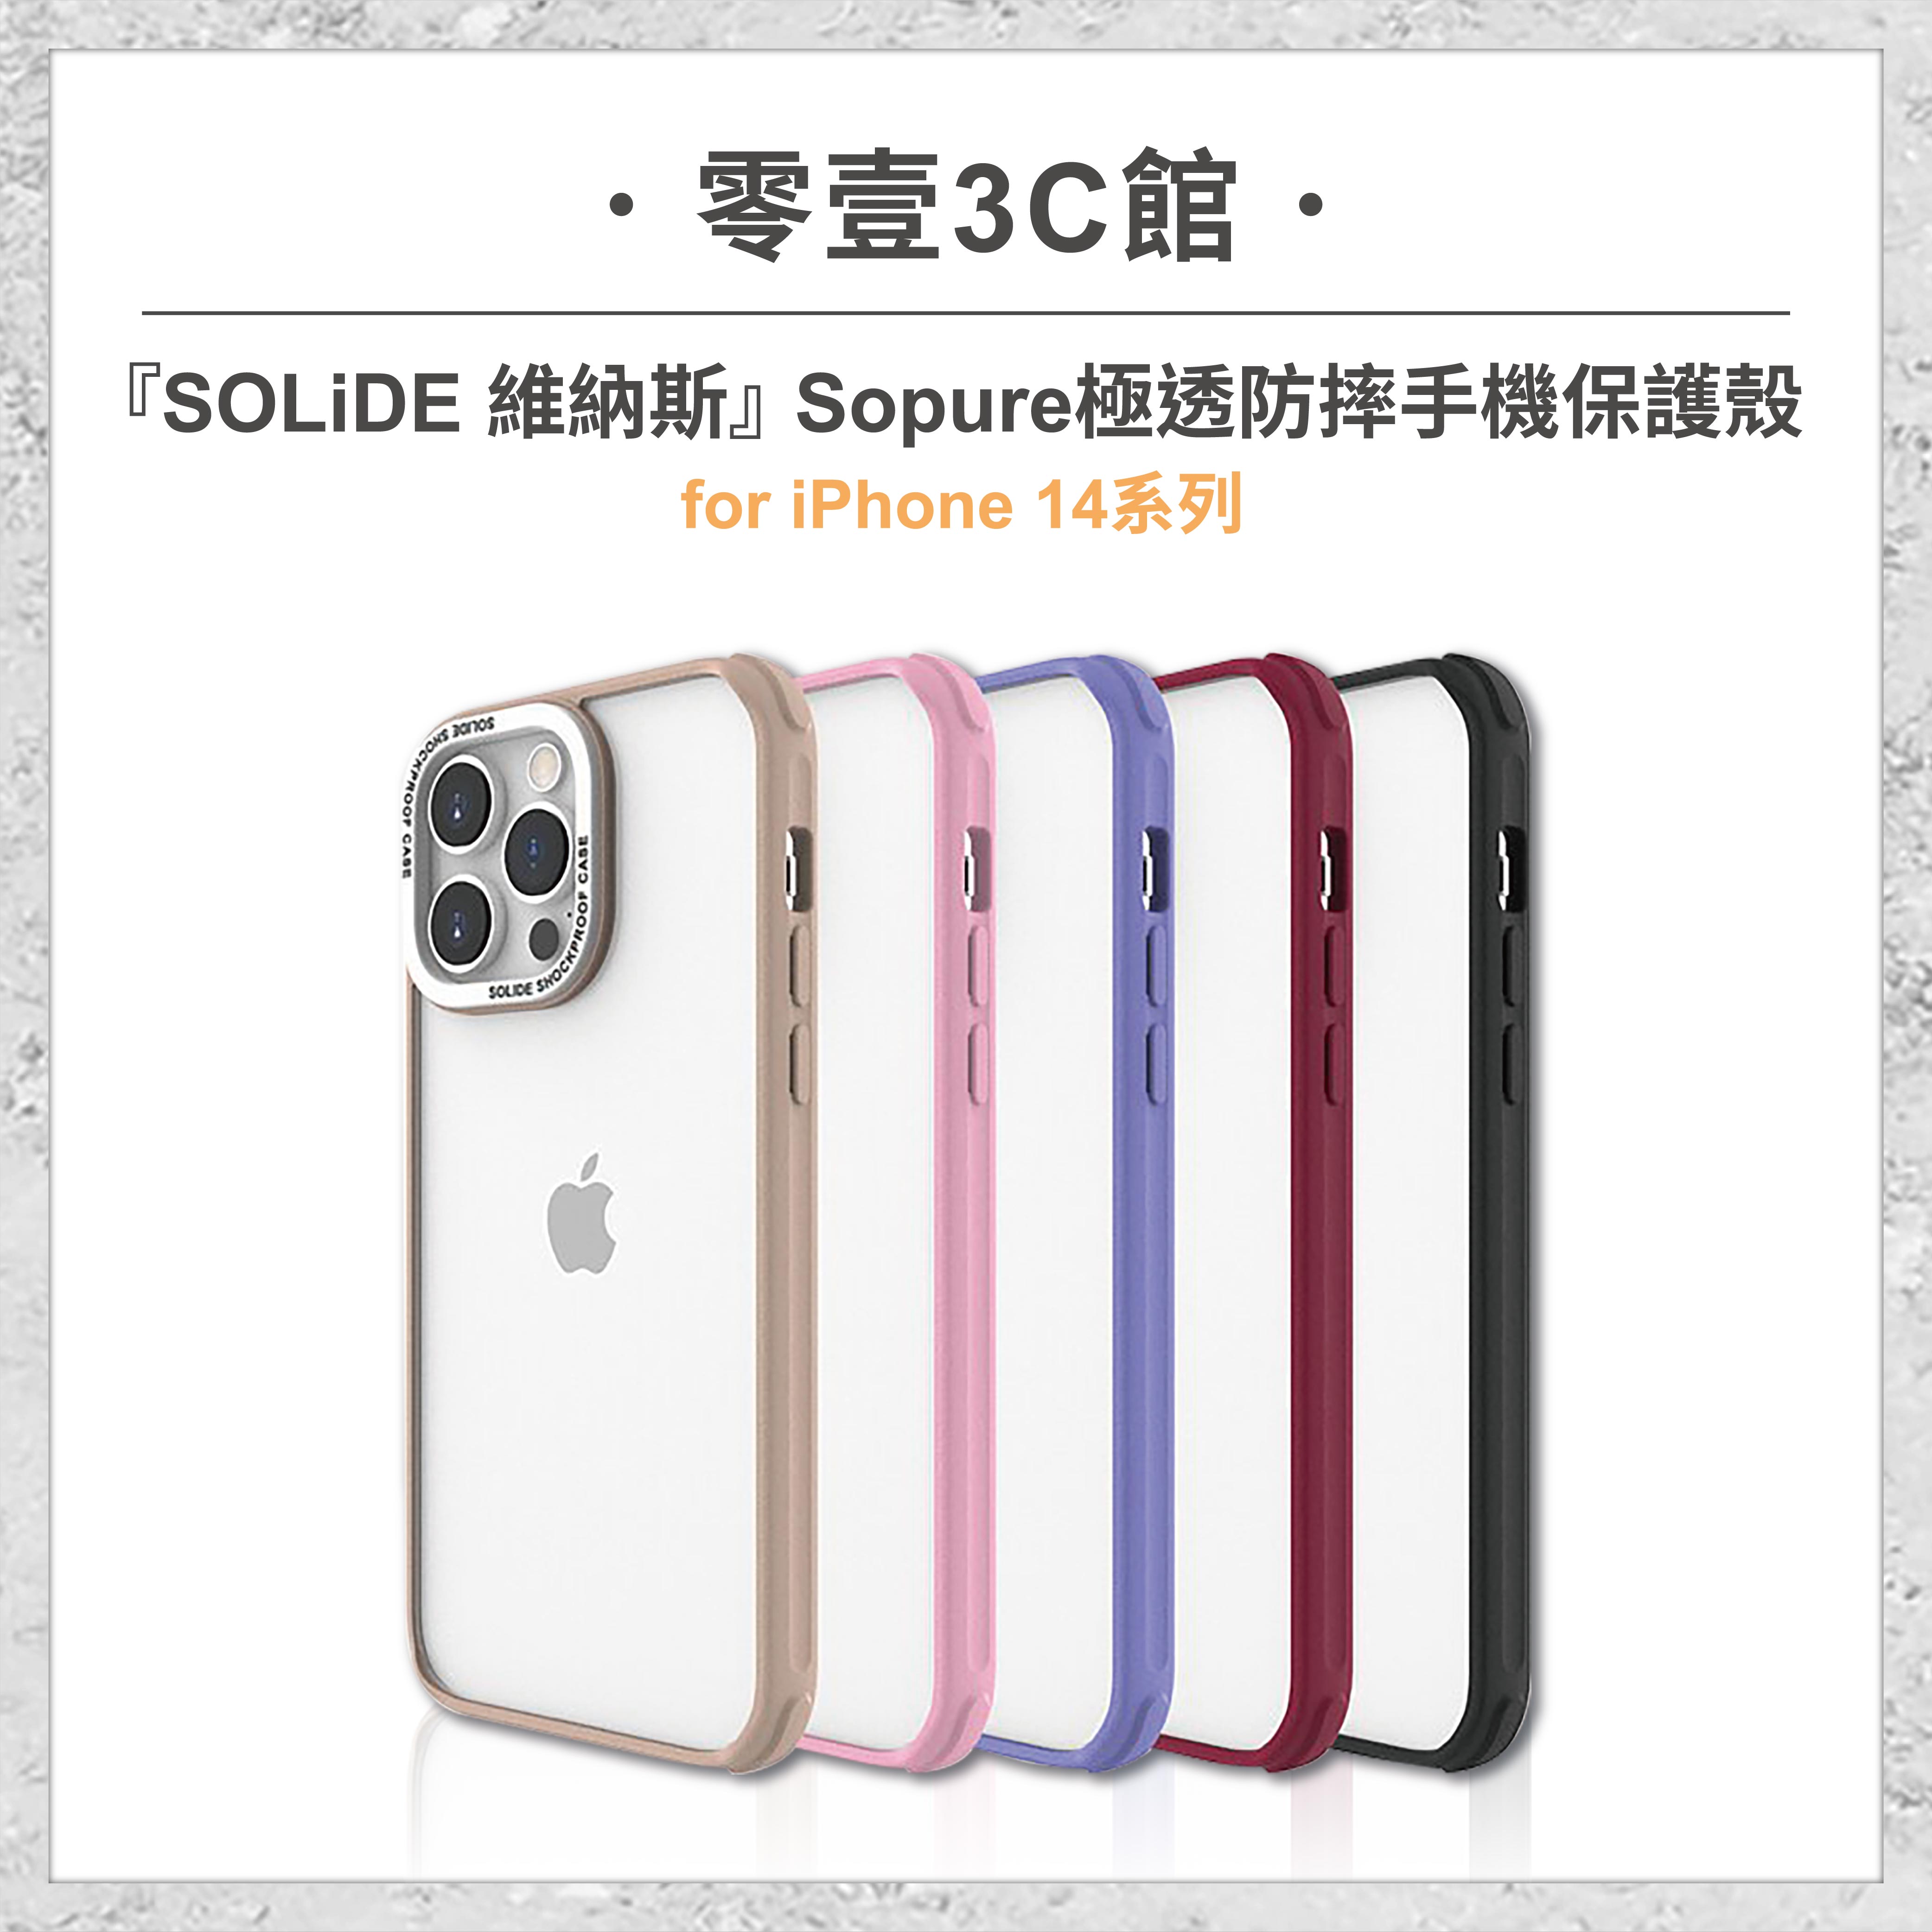 『SOLiDE 維納斯』Sopure 極透防摔手機保護殼 for iPhone14系列 14 14 Plus 14 Pro 14 Pro Max 手機防摔保護殼